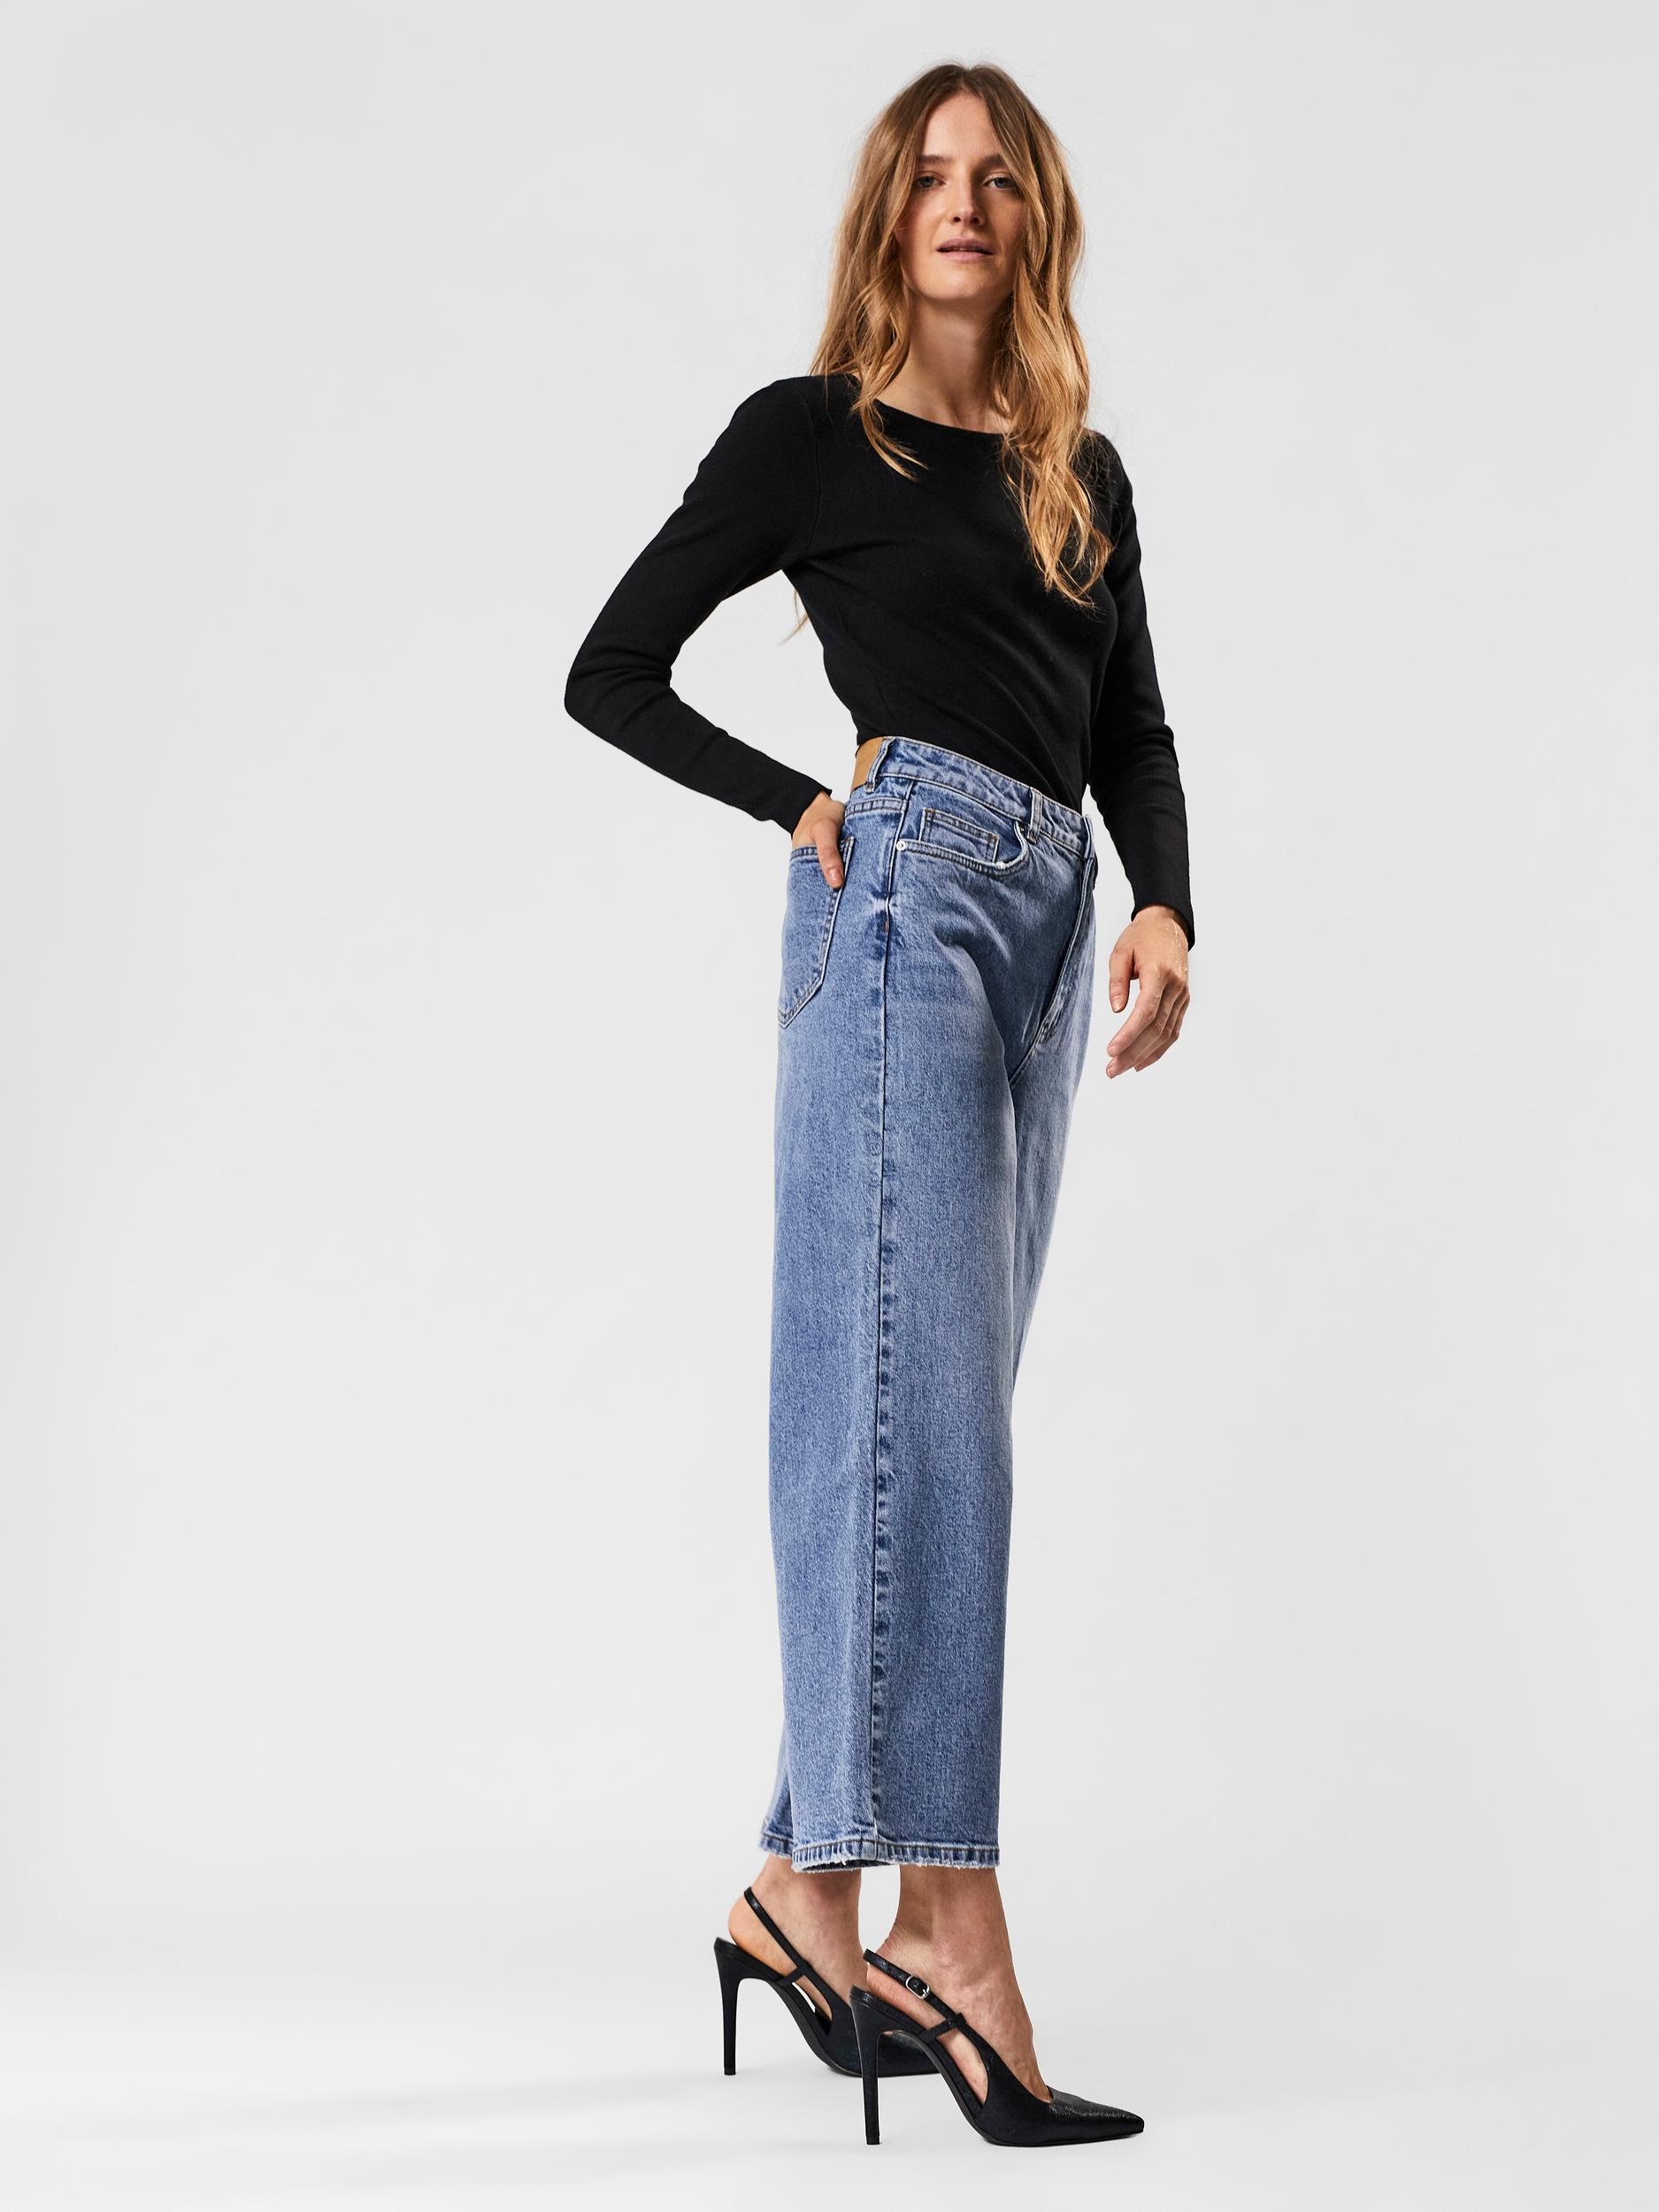 Vero Moda Kathy Jeans, Light Blue Denim, W26/L32